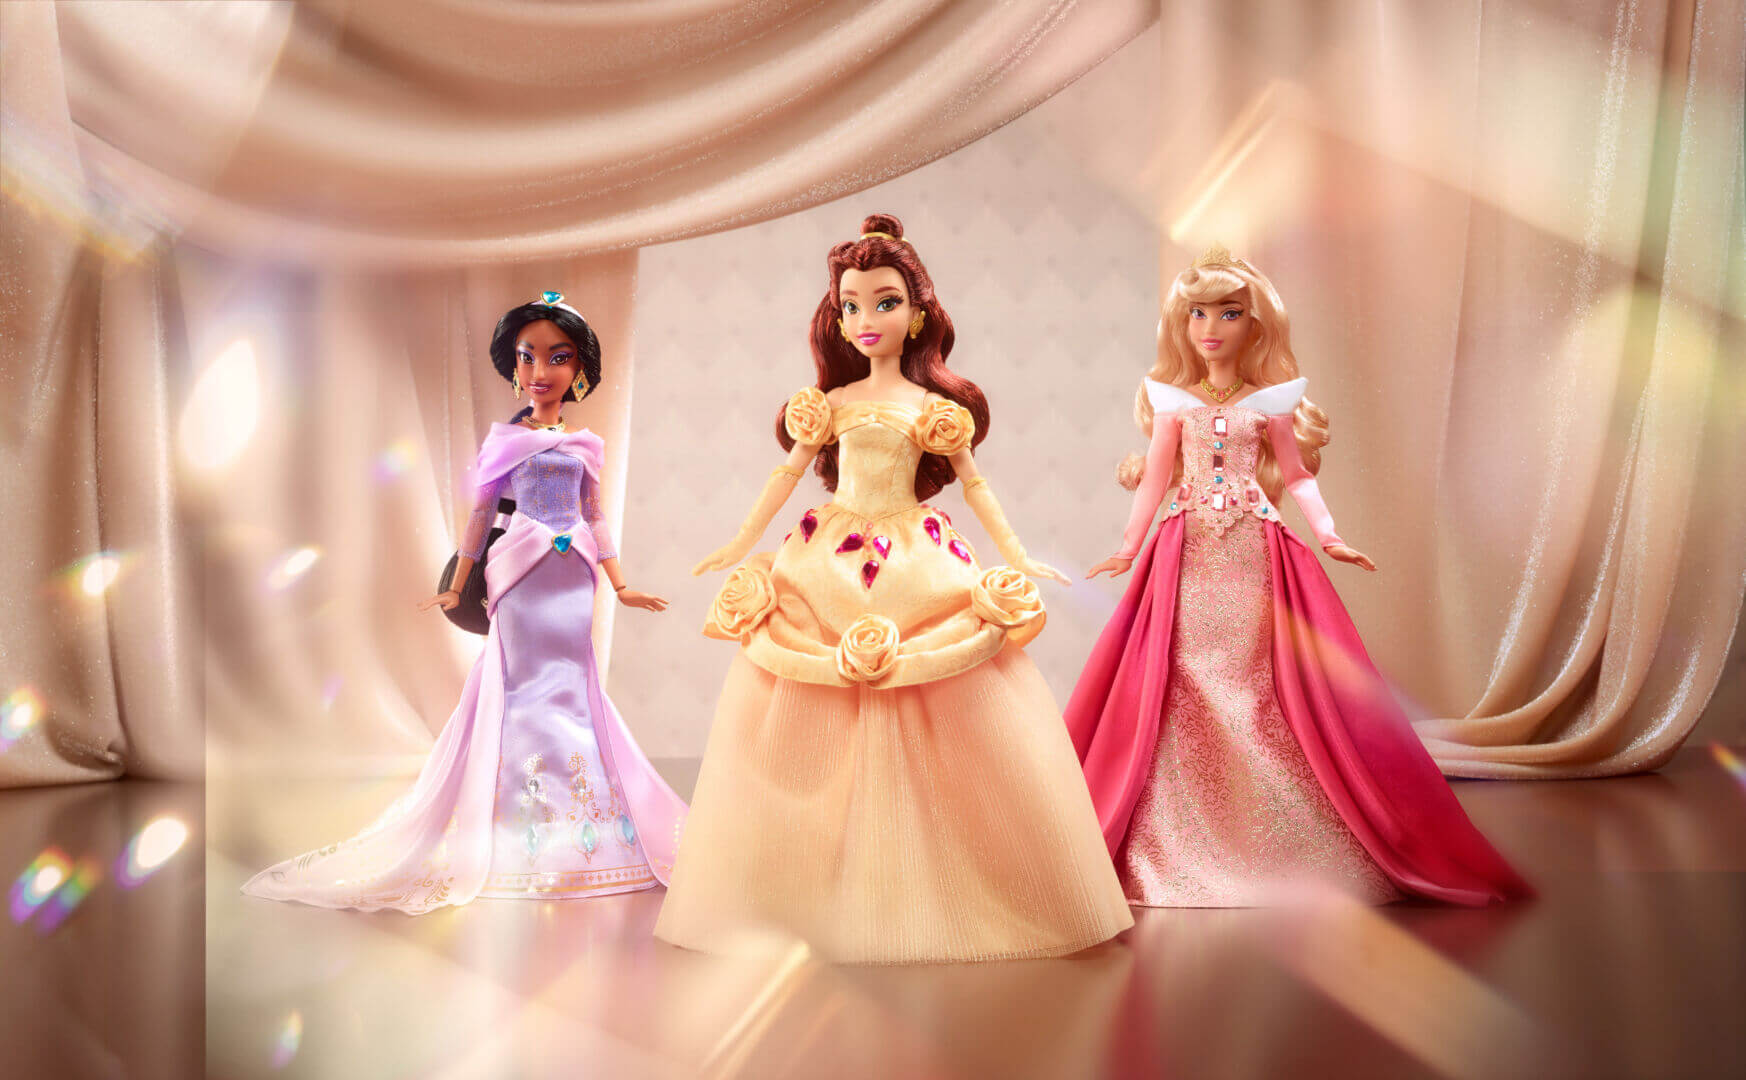 Disney Collector 100 Years of Wonder Cinderella Doll – Mattel Creations